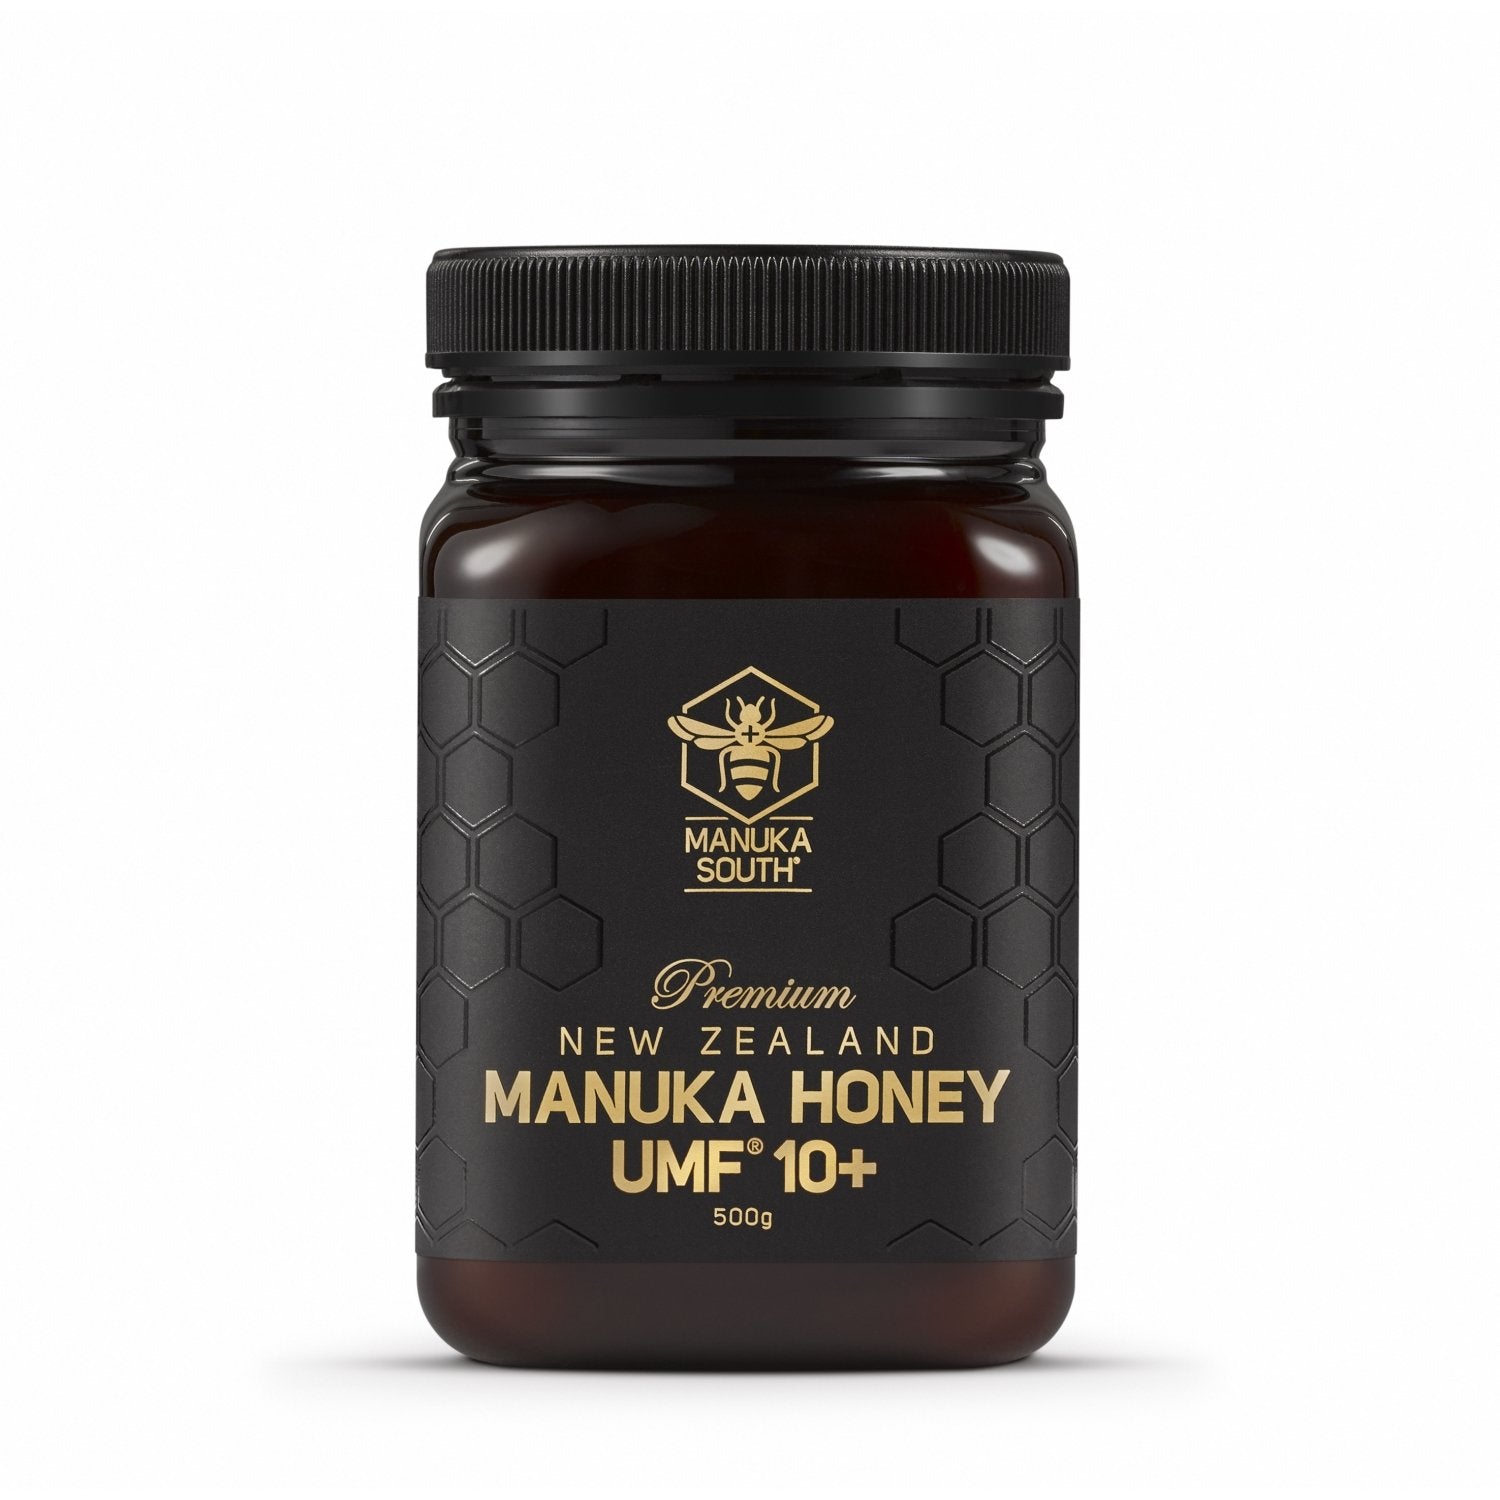 Manuka Honey - Manuka South - UMF 10+ - 500g - Pure New Zealand Manuka Honey. 10+UMF is a good Activity rating for everyday use to maintain great health.